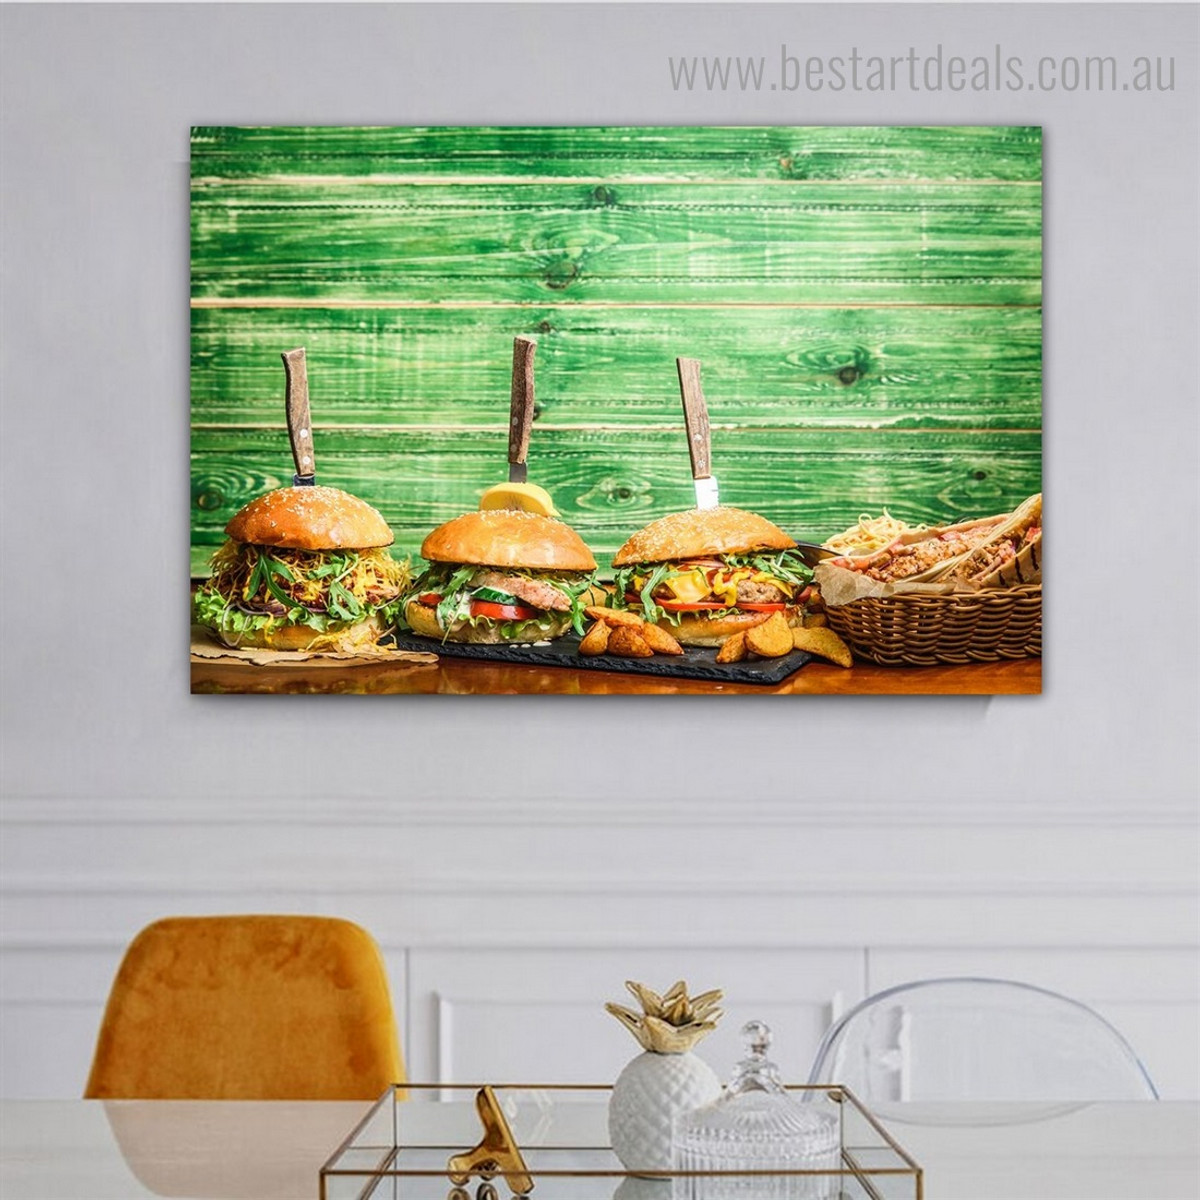 Burgers Food Modern Framed Artwork Image Canvas Print for Room Wall Garnish